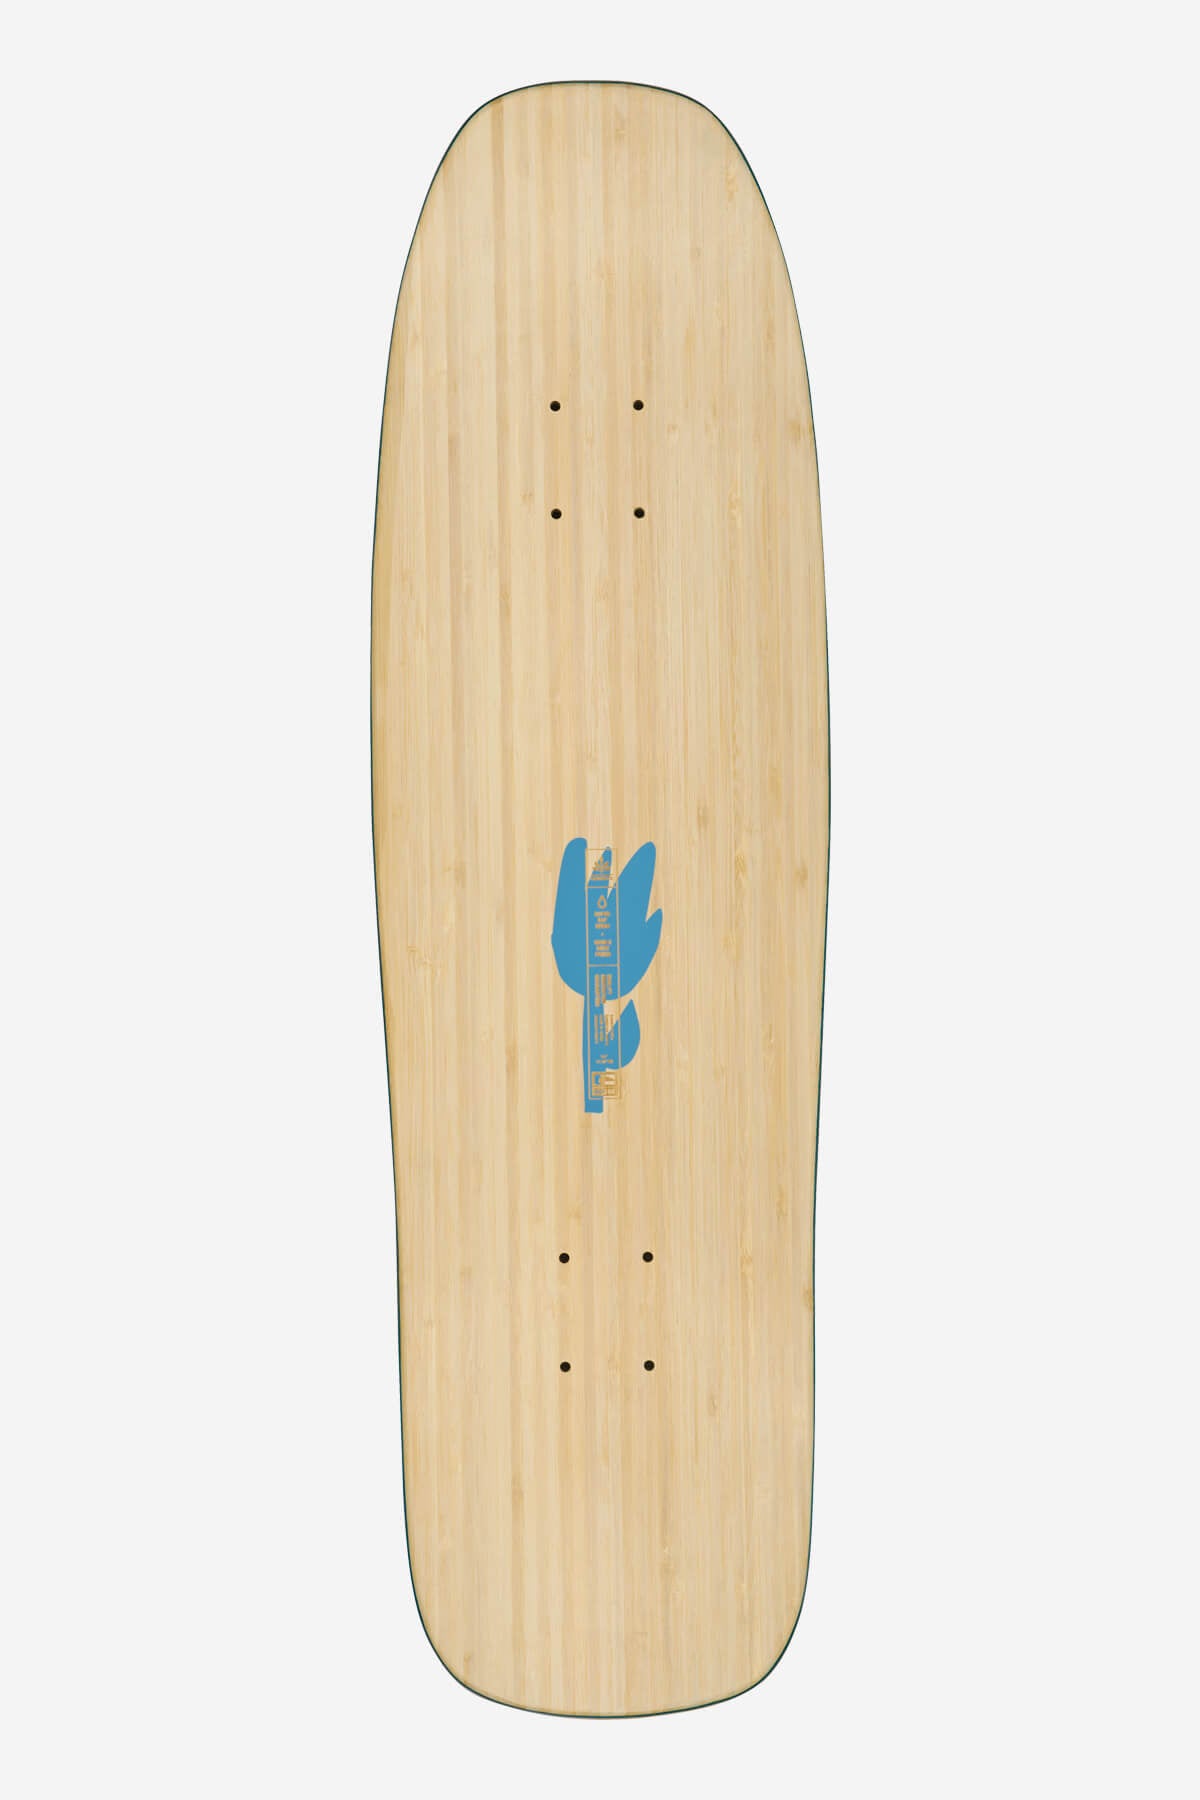 Globe - Disaster 2 - Bambú/Libre - 8.75" Skateboard Deck